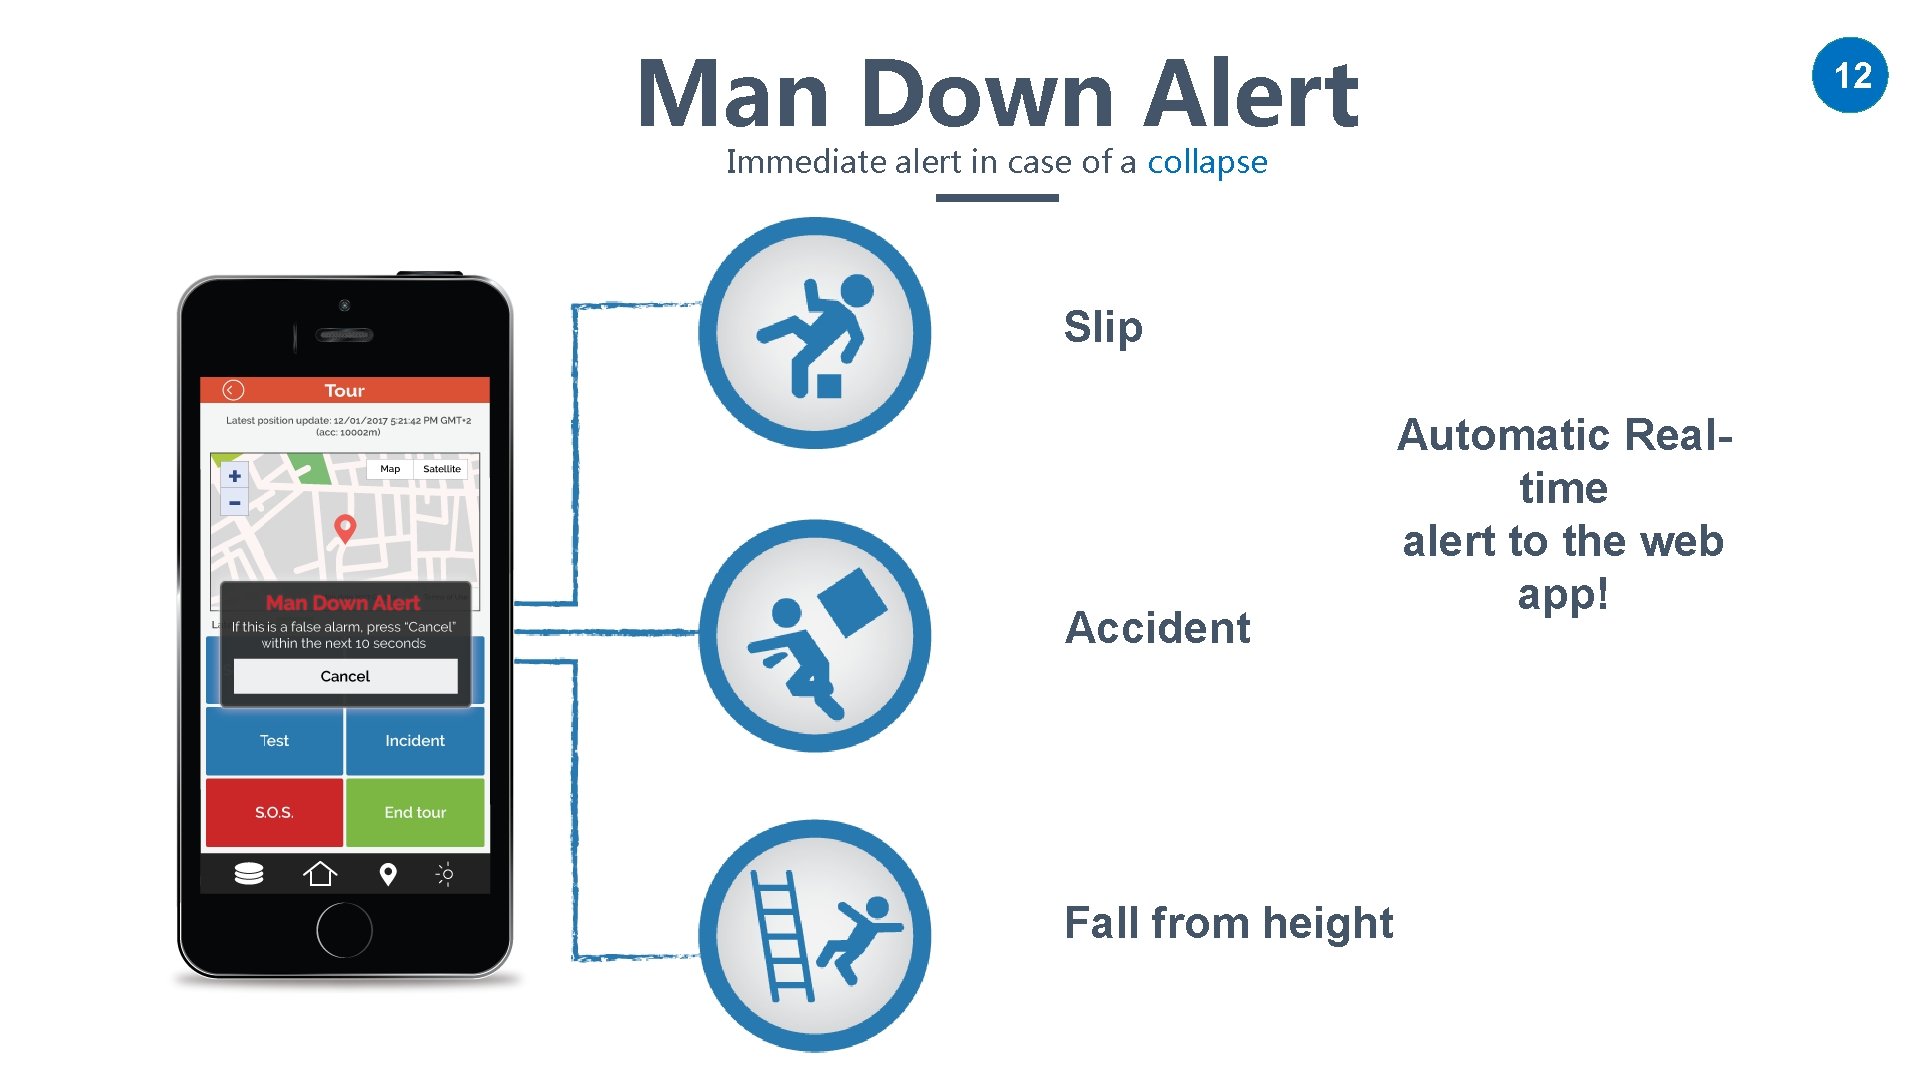 Man Down Alert 12 Immediate alert in case of a collapse Slip Accident Fall